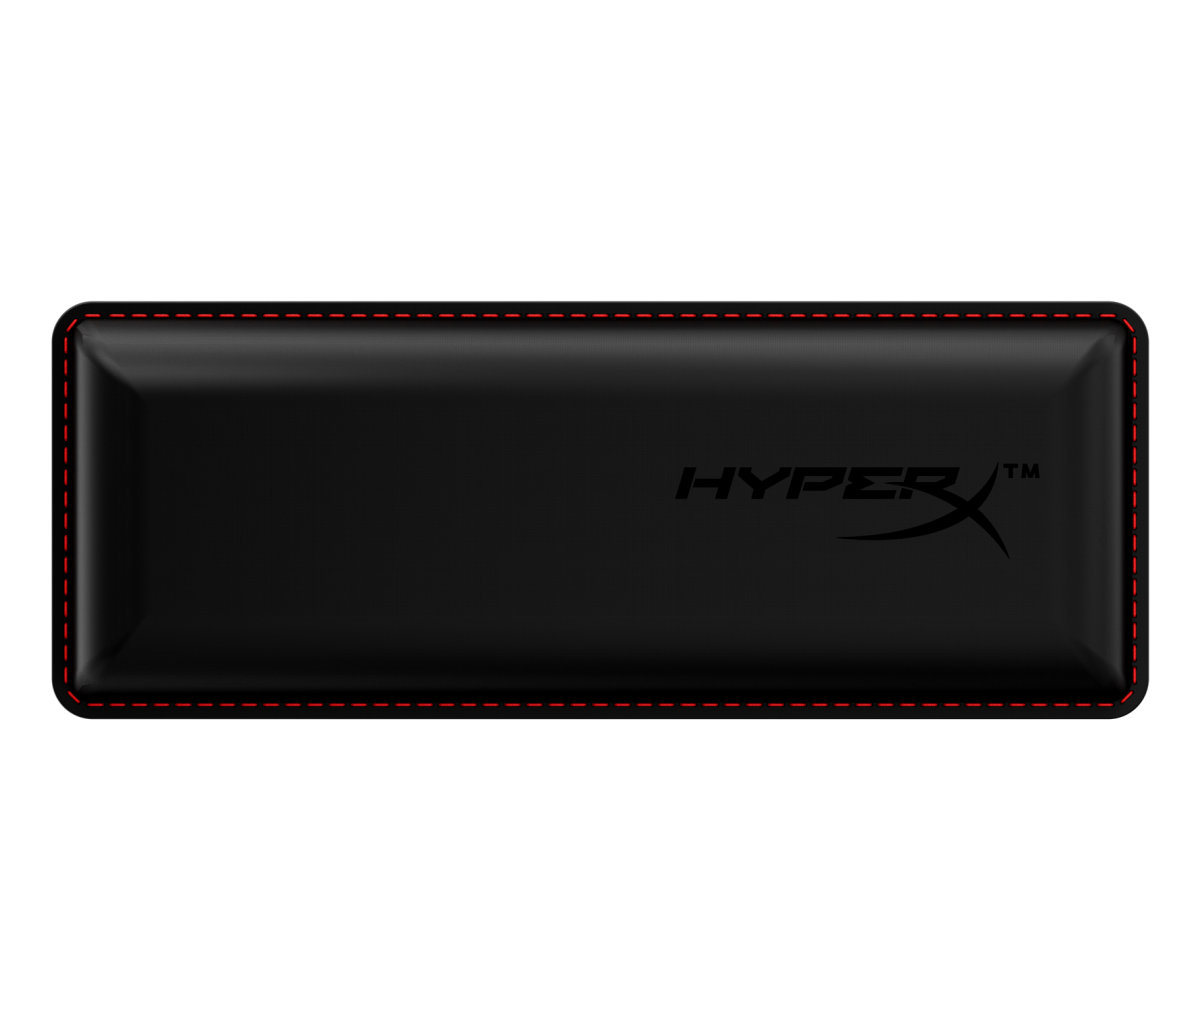 HyperX Wrist Rest - Mouse (4Z7X2AA)